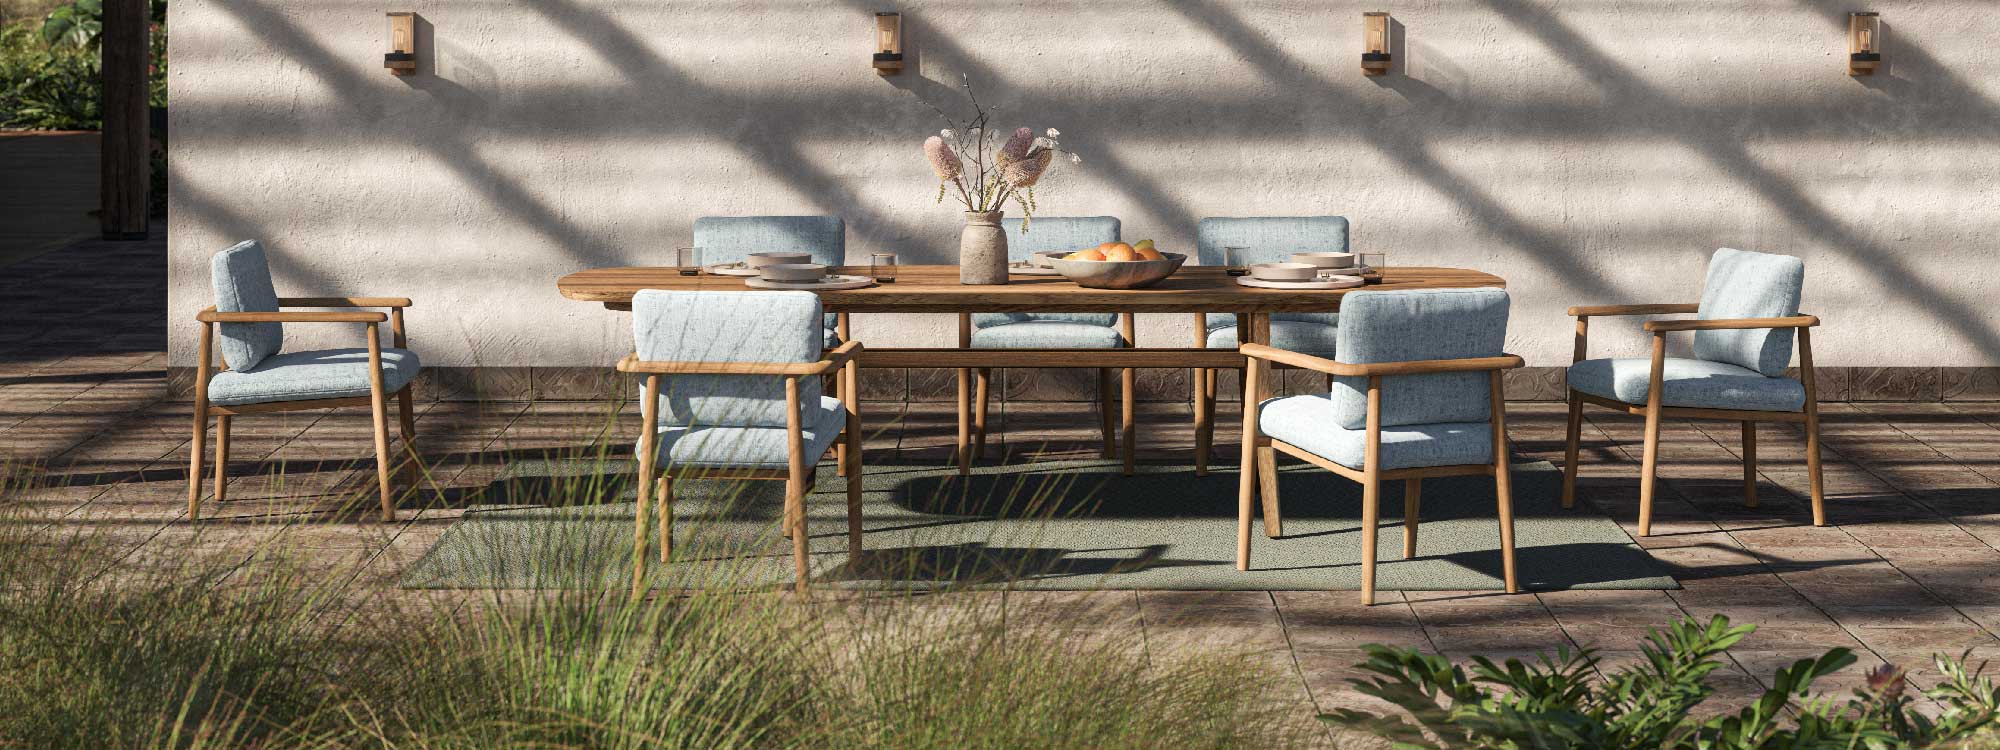 Image of Mambo teak garden dining chairs and Zidiz teak table by Royal Botania